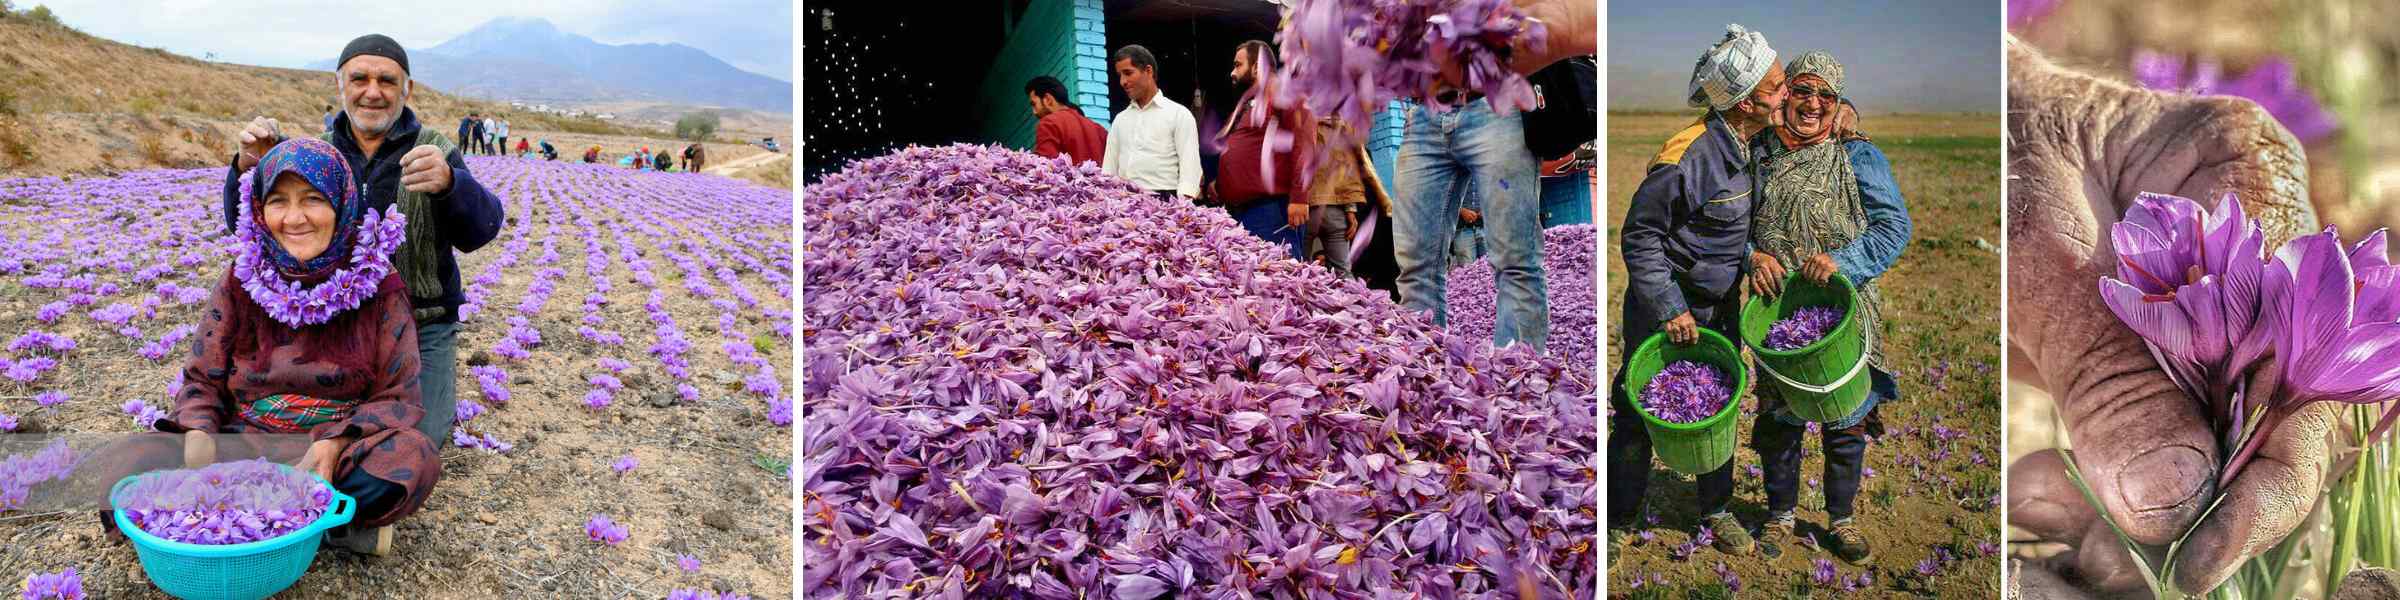 The Tradition Factor in Persian Saffron's Superiority